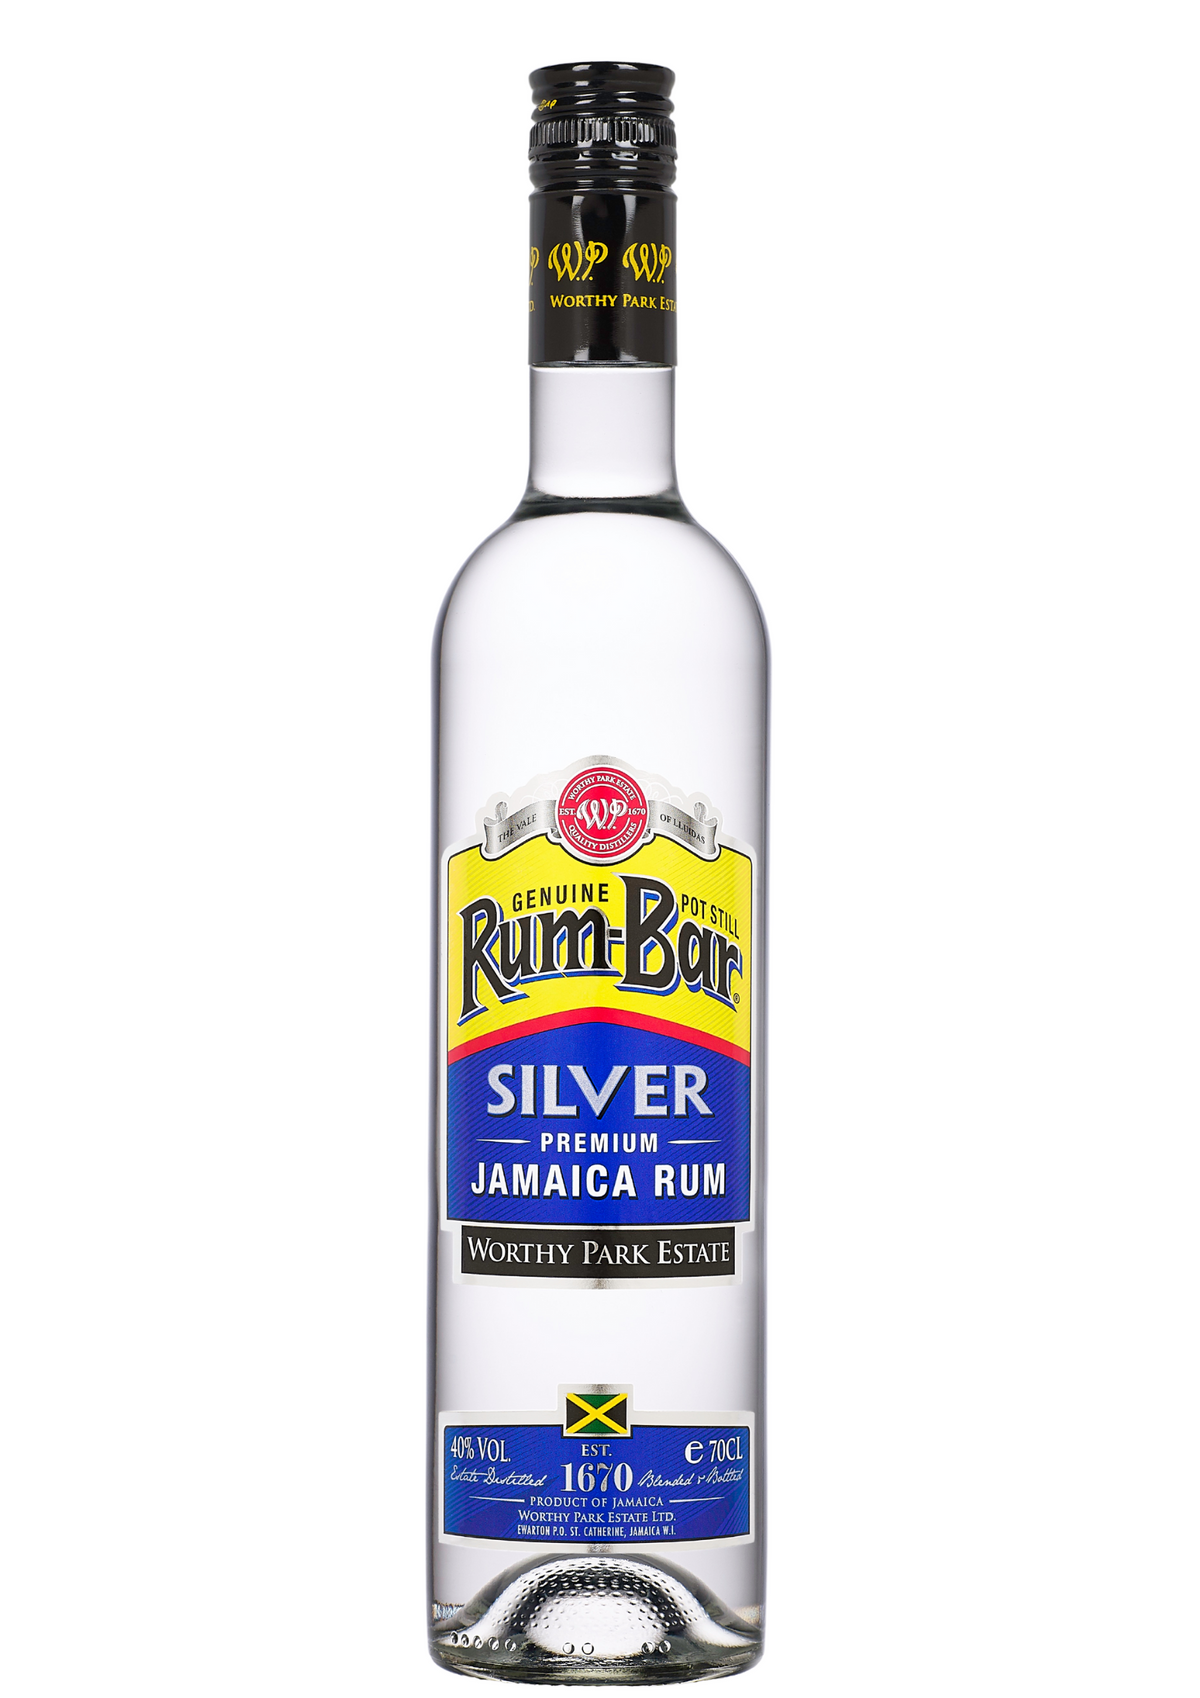 Bottle of Worthy Park Rum-Bar Silver Pot Still Jamaica Rum, 40% - The Spirits Room